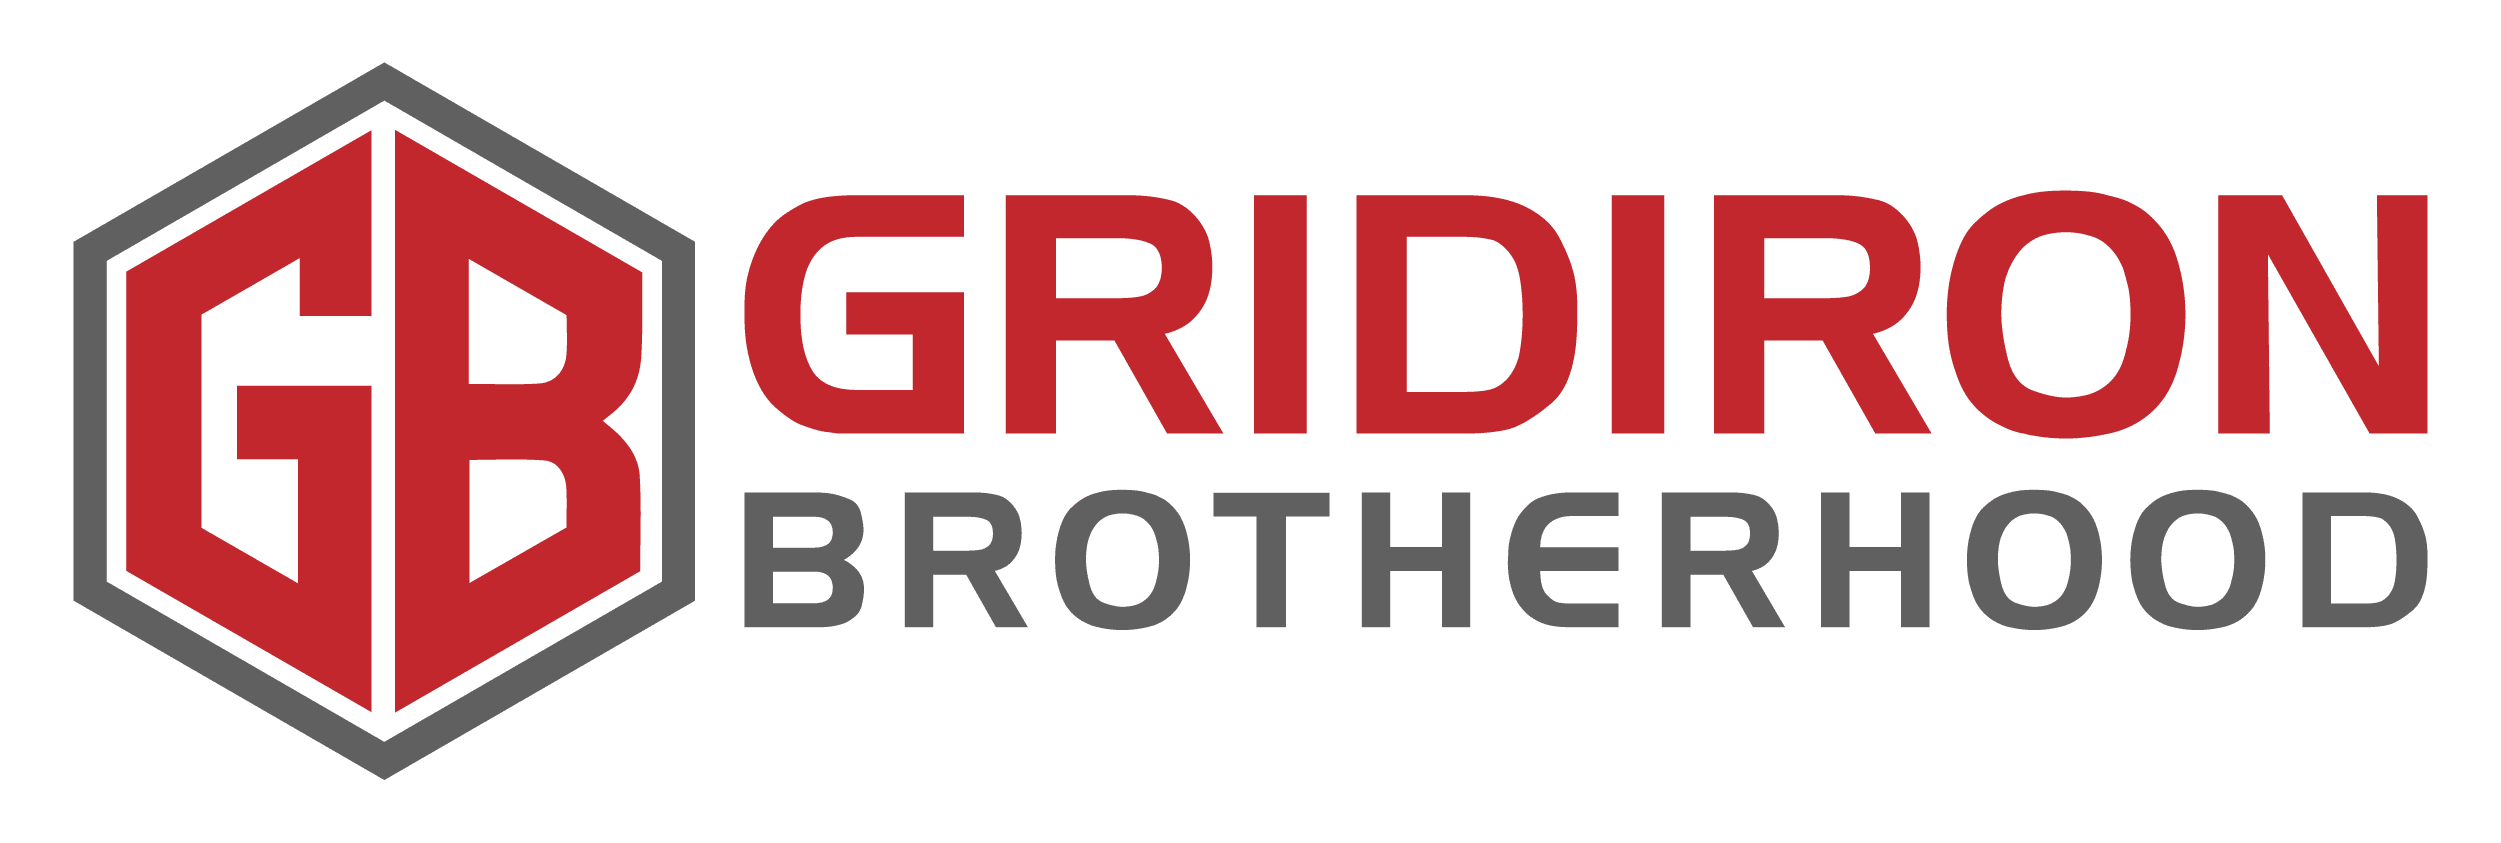 Gridiron Brotherhood